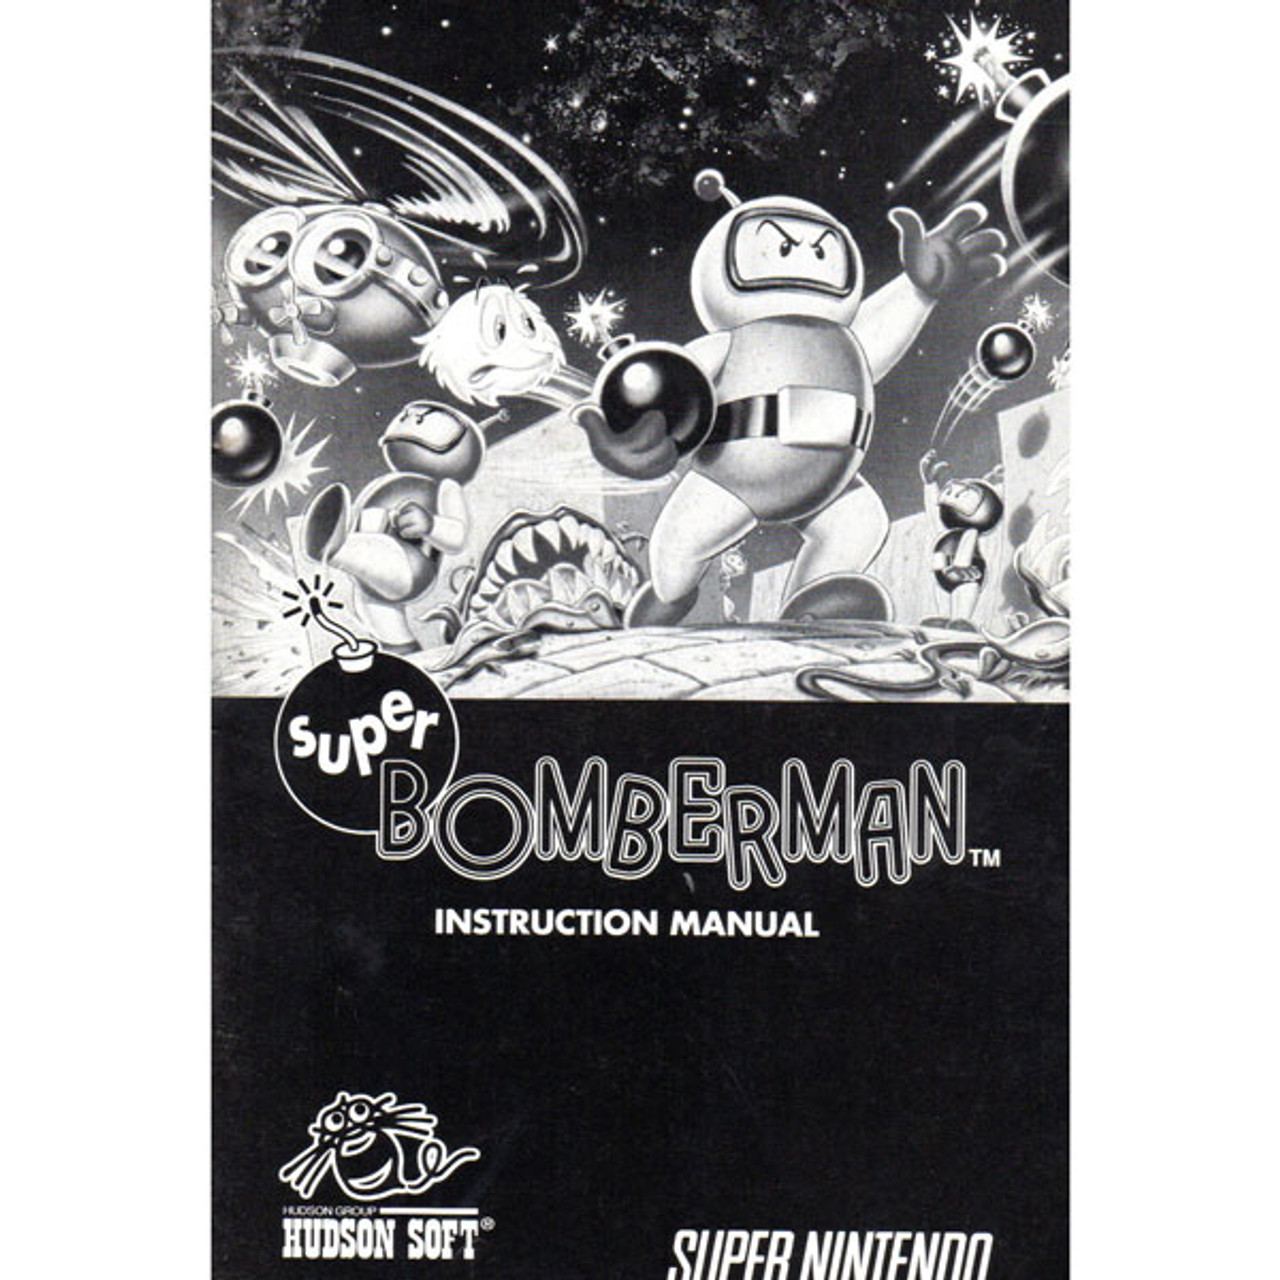 Super Bomberman Super Nintendo Used Manual For Sale